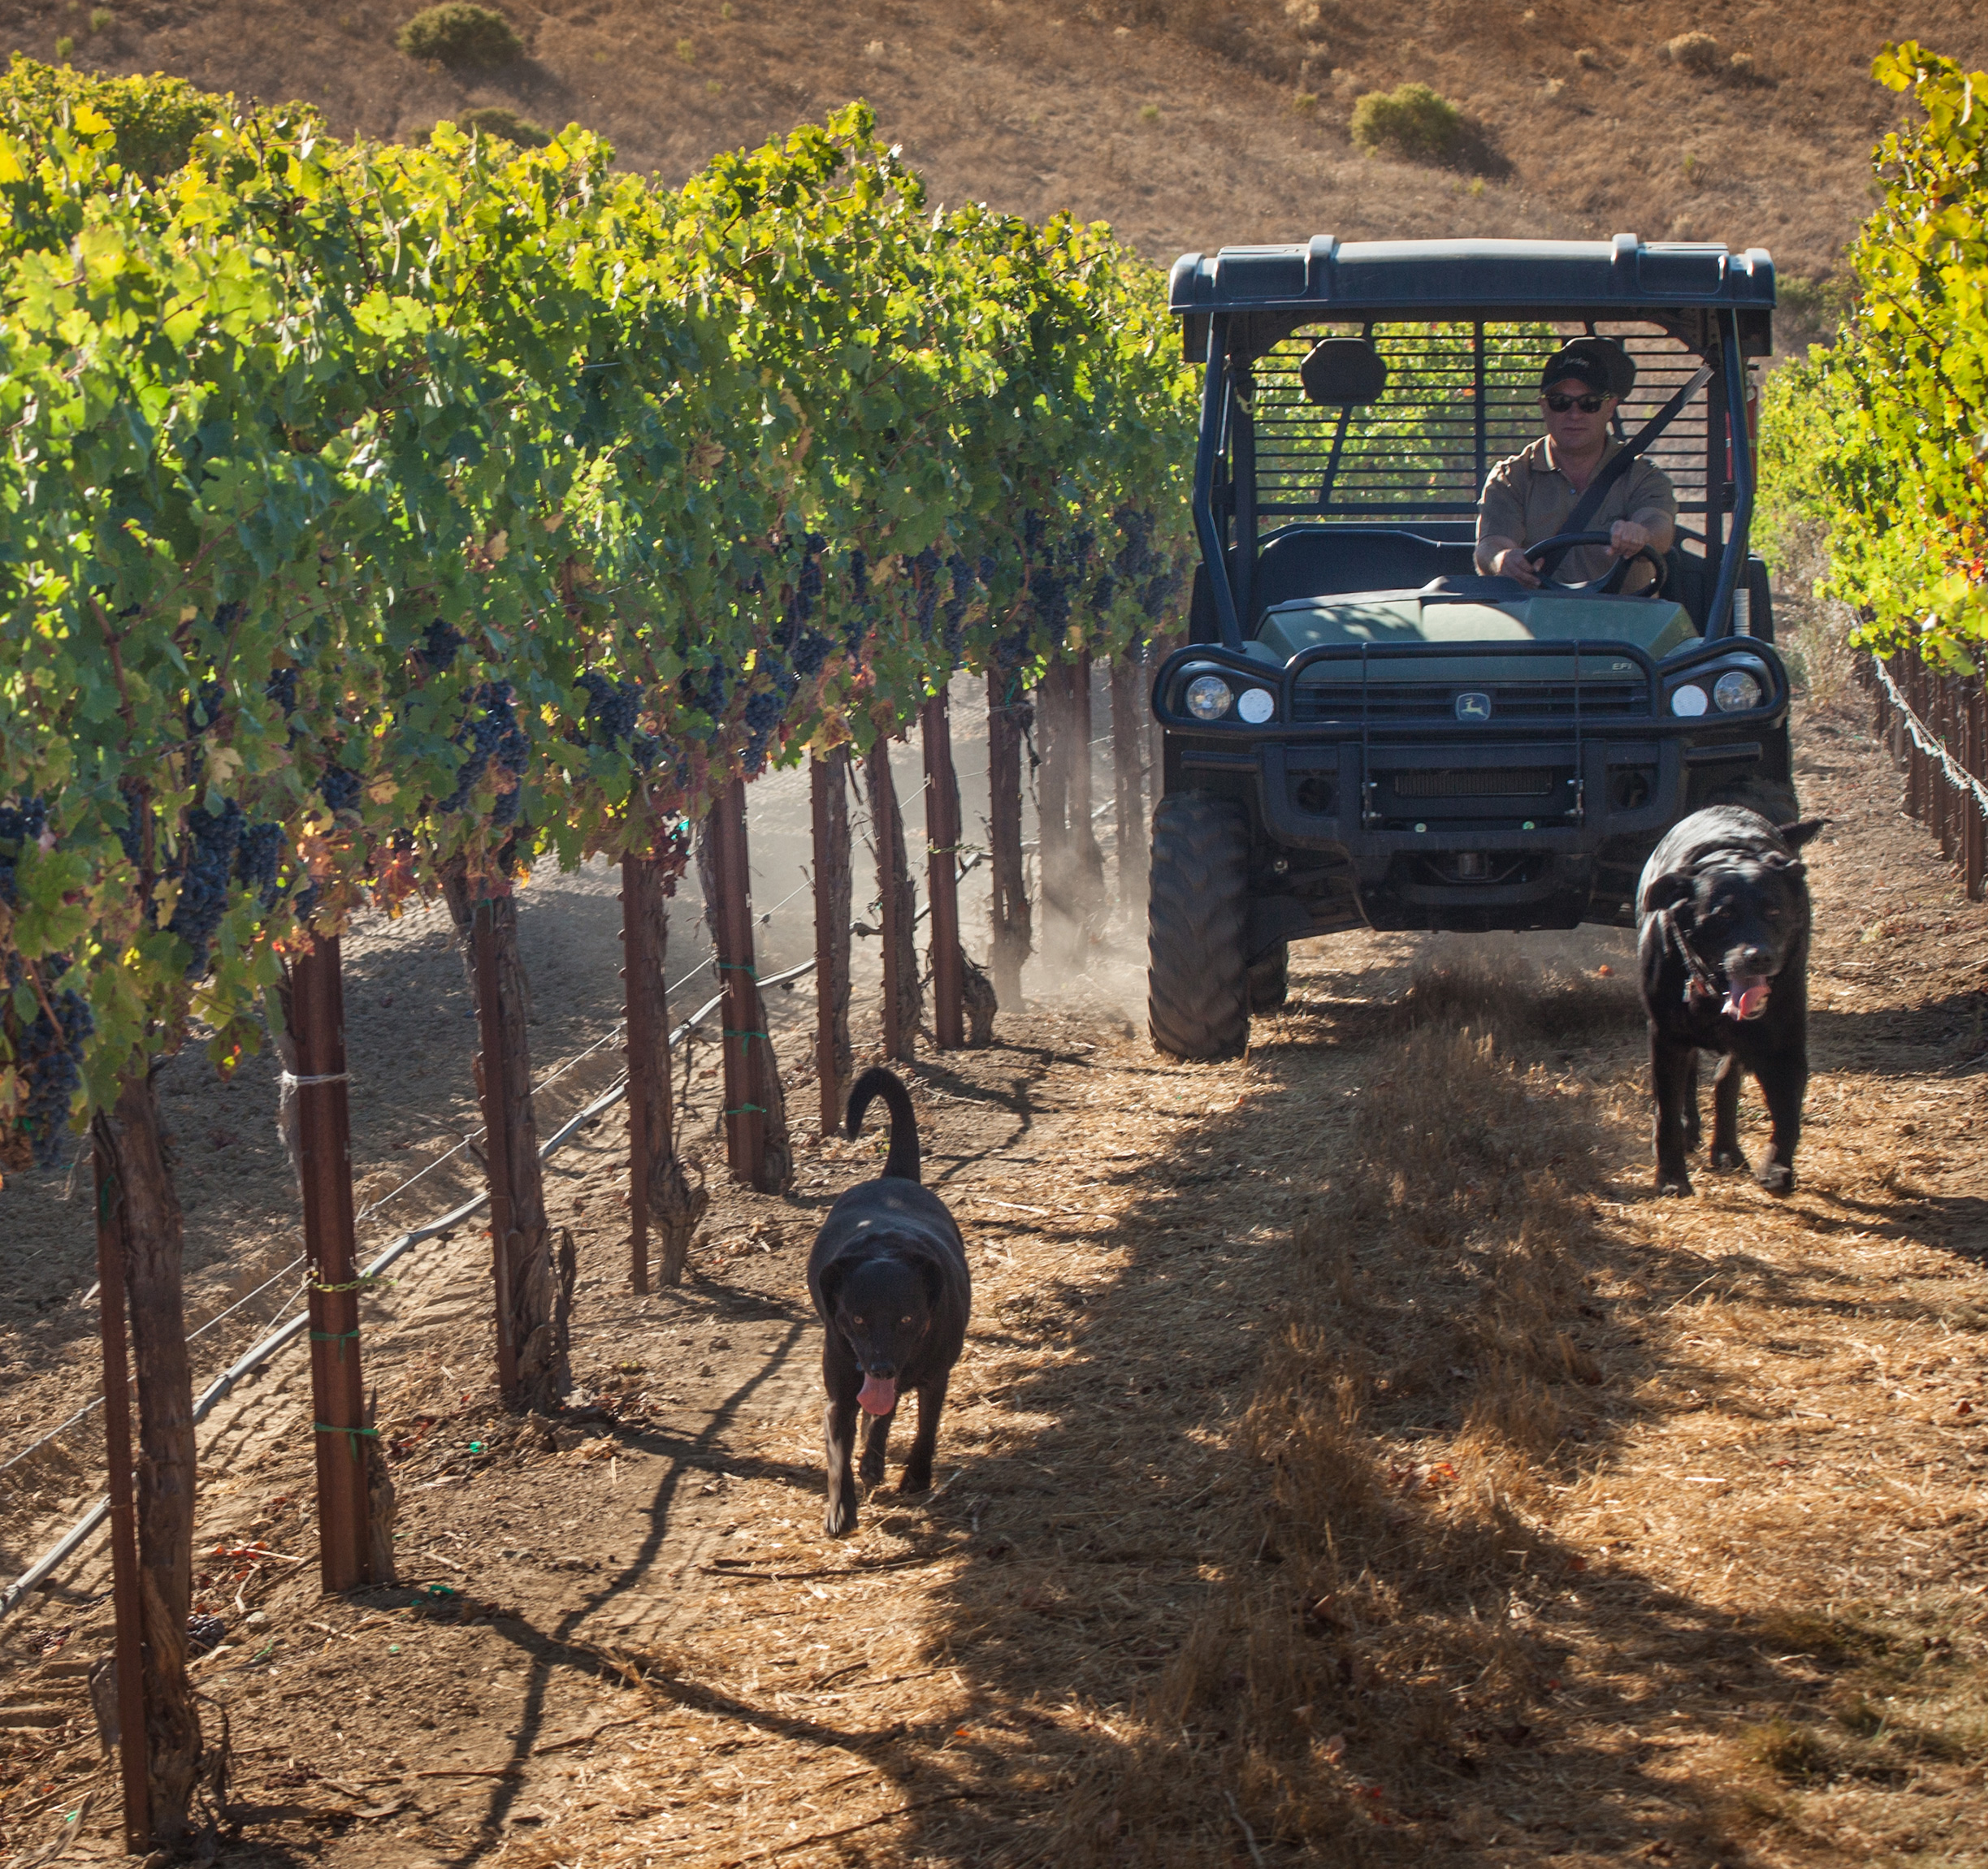 John Jordan driving a vehicle in a vineyard. Dogs are running alongside